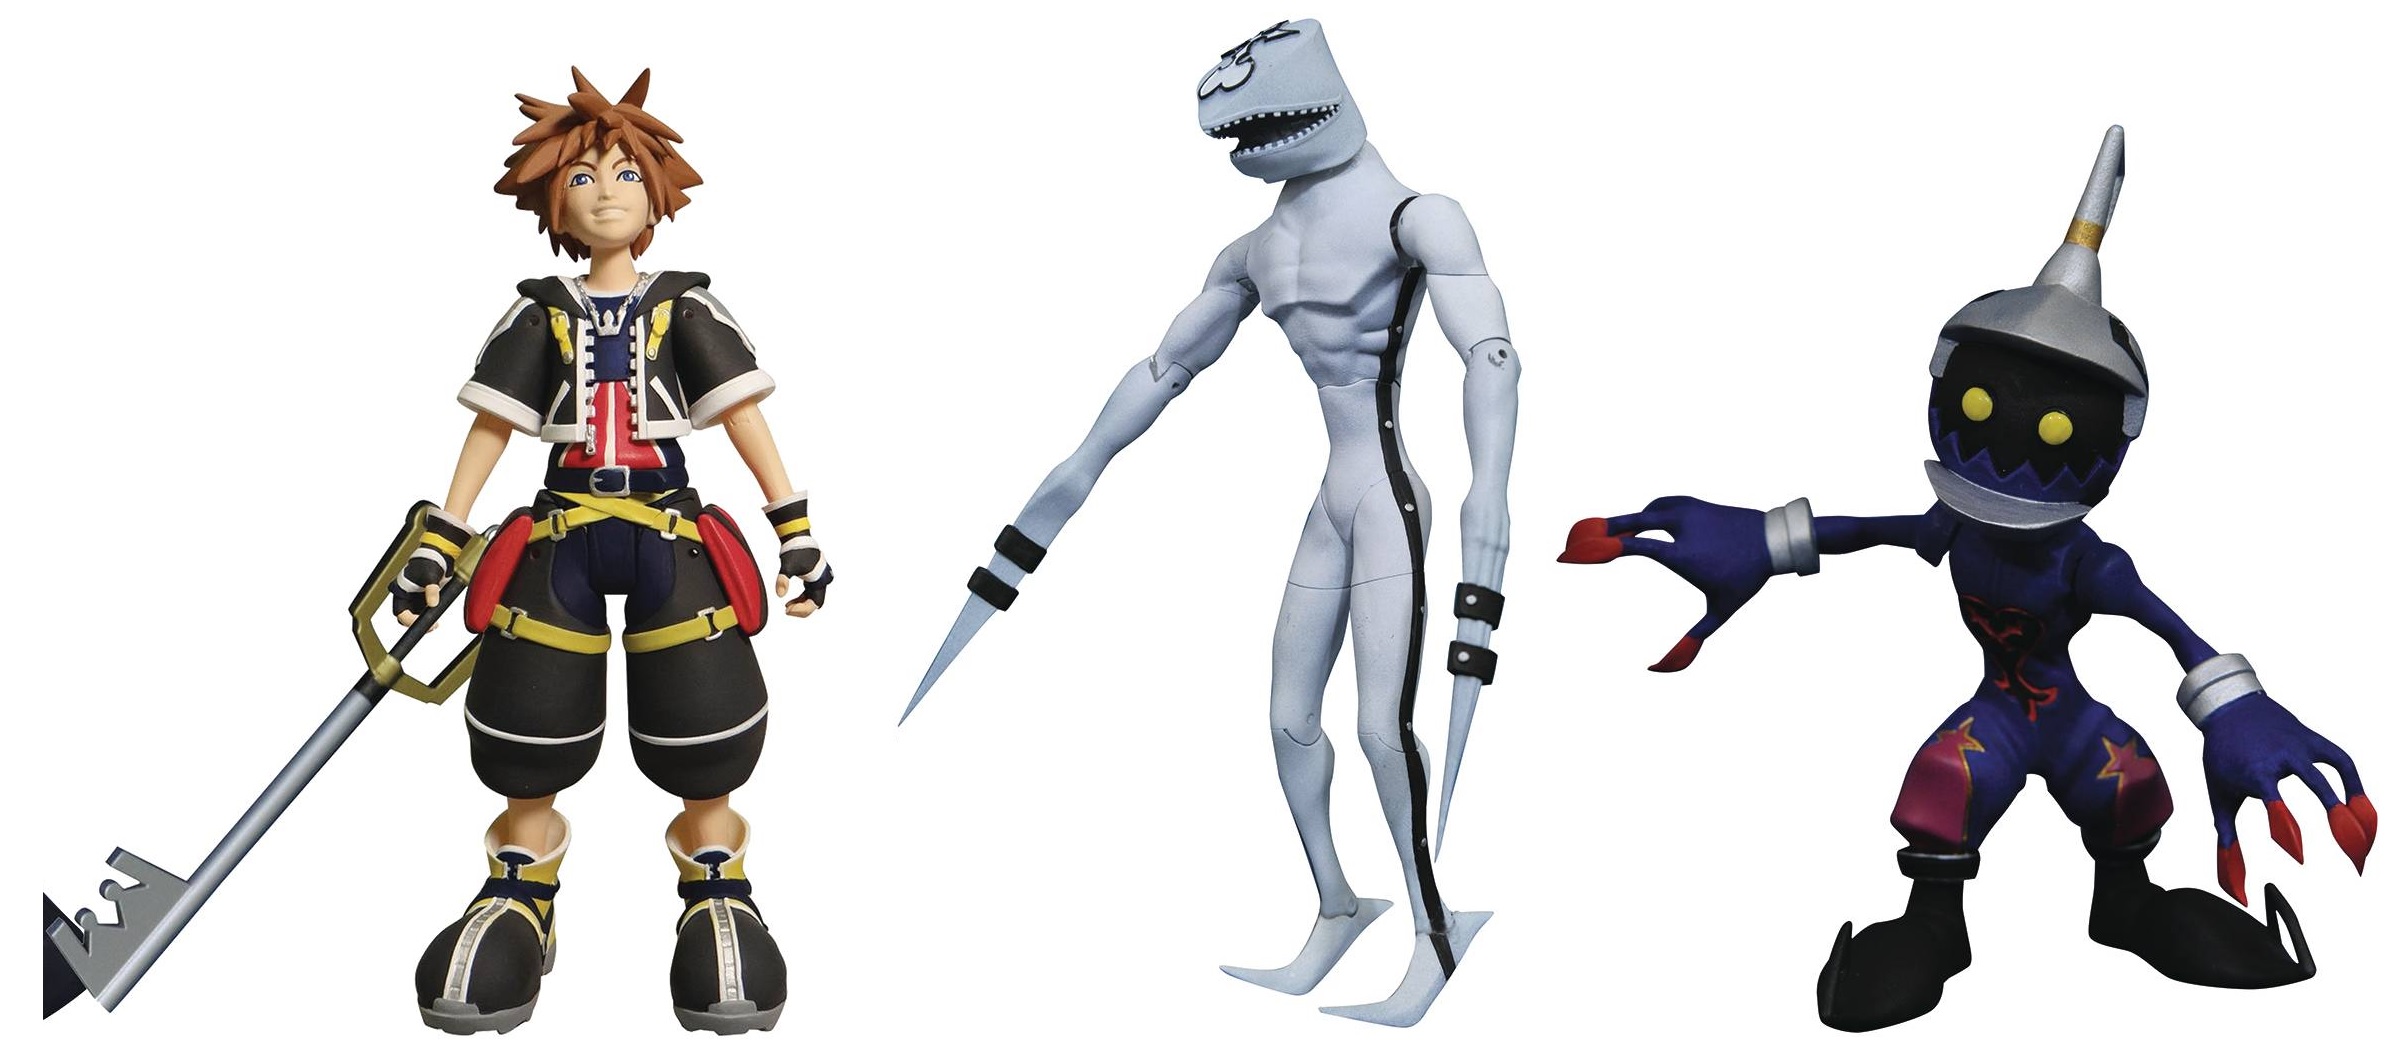 Kingdom Hearts Action Figures - Series 1: Sora, Dusk, Soldier (Set of 3) @Archonia_US2400 x 1047